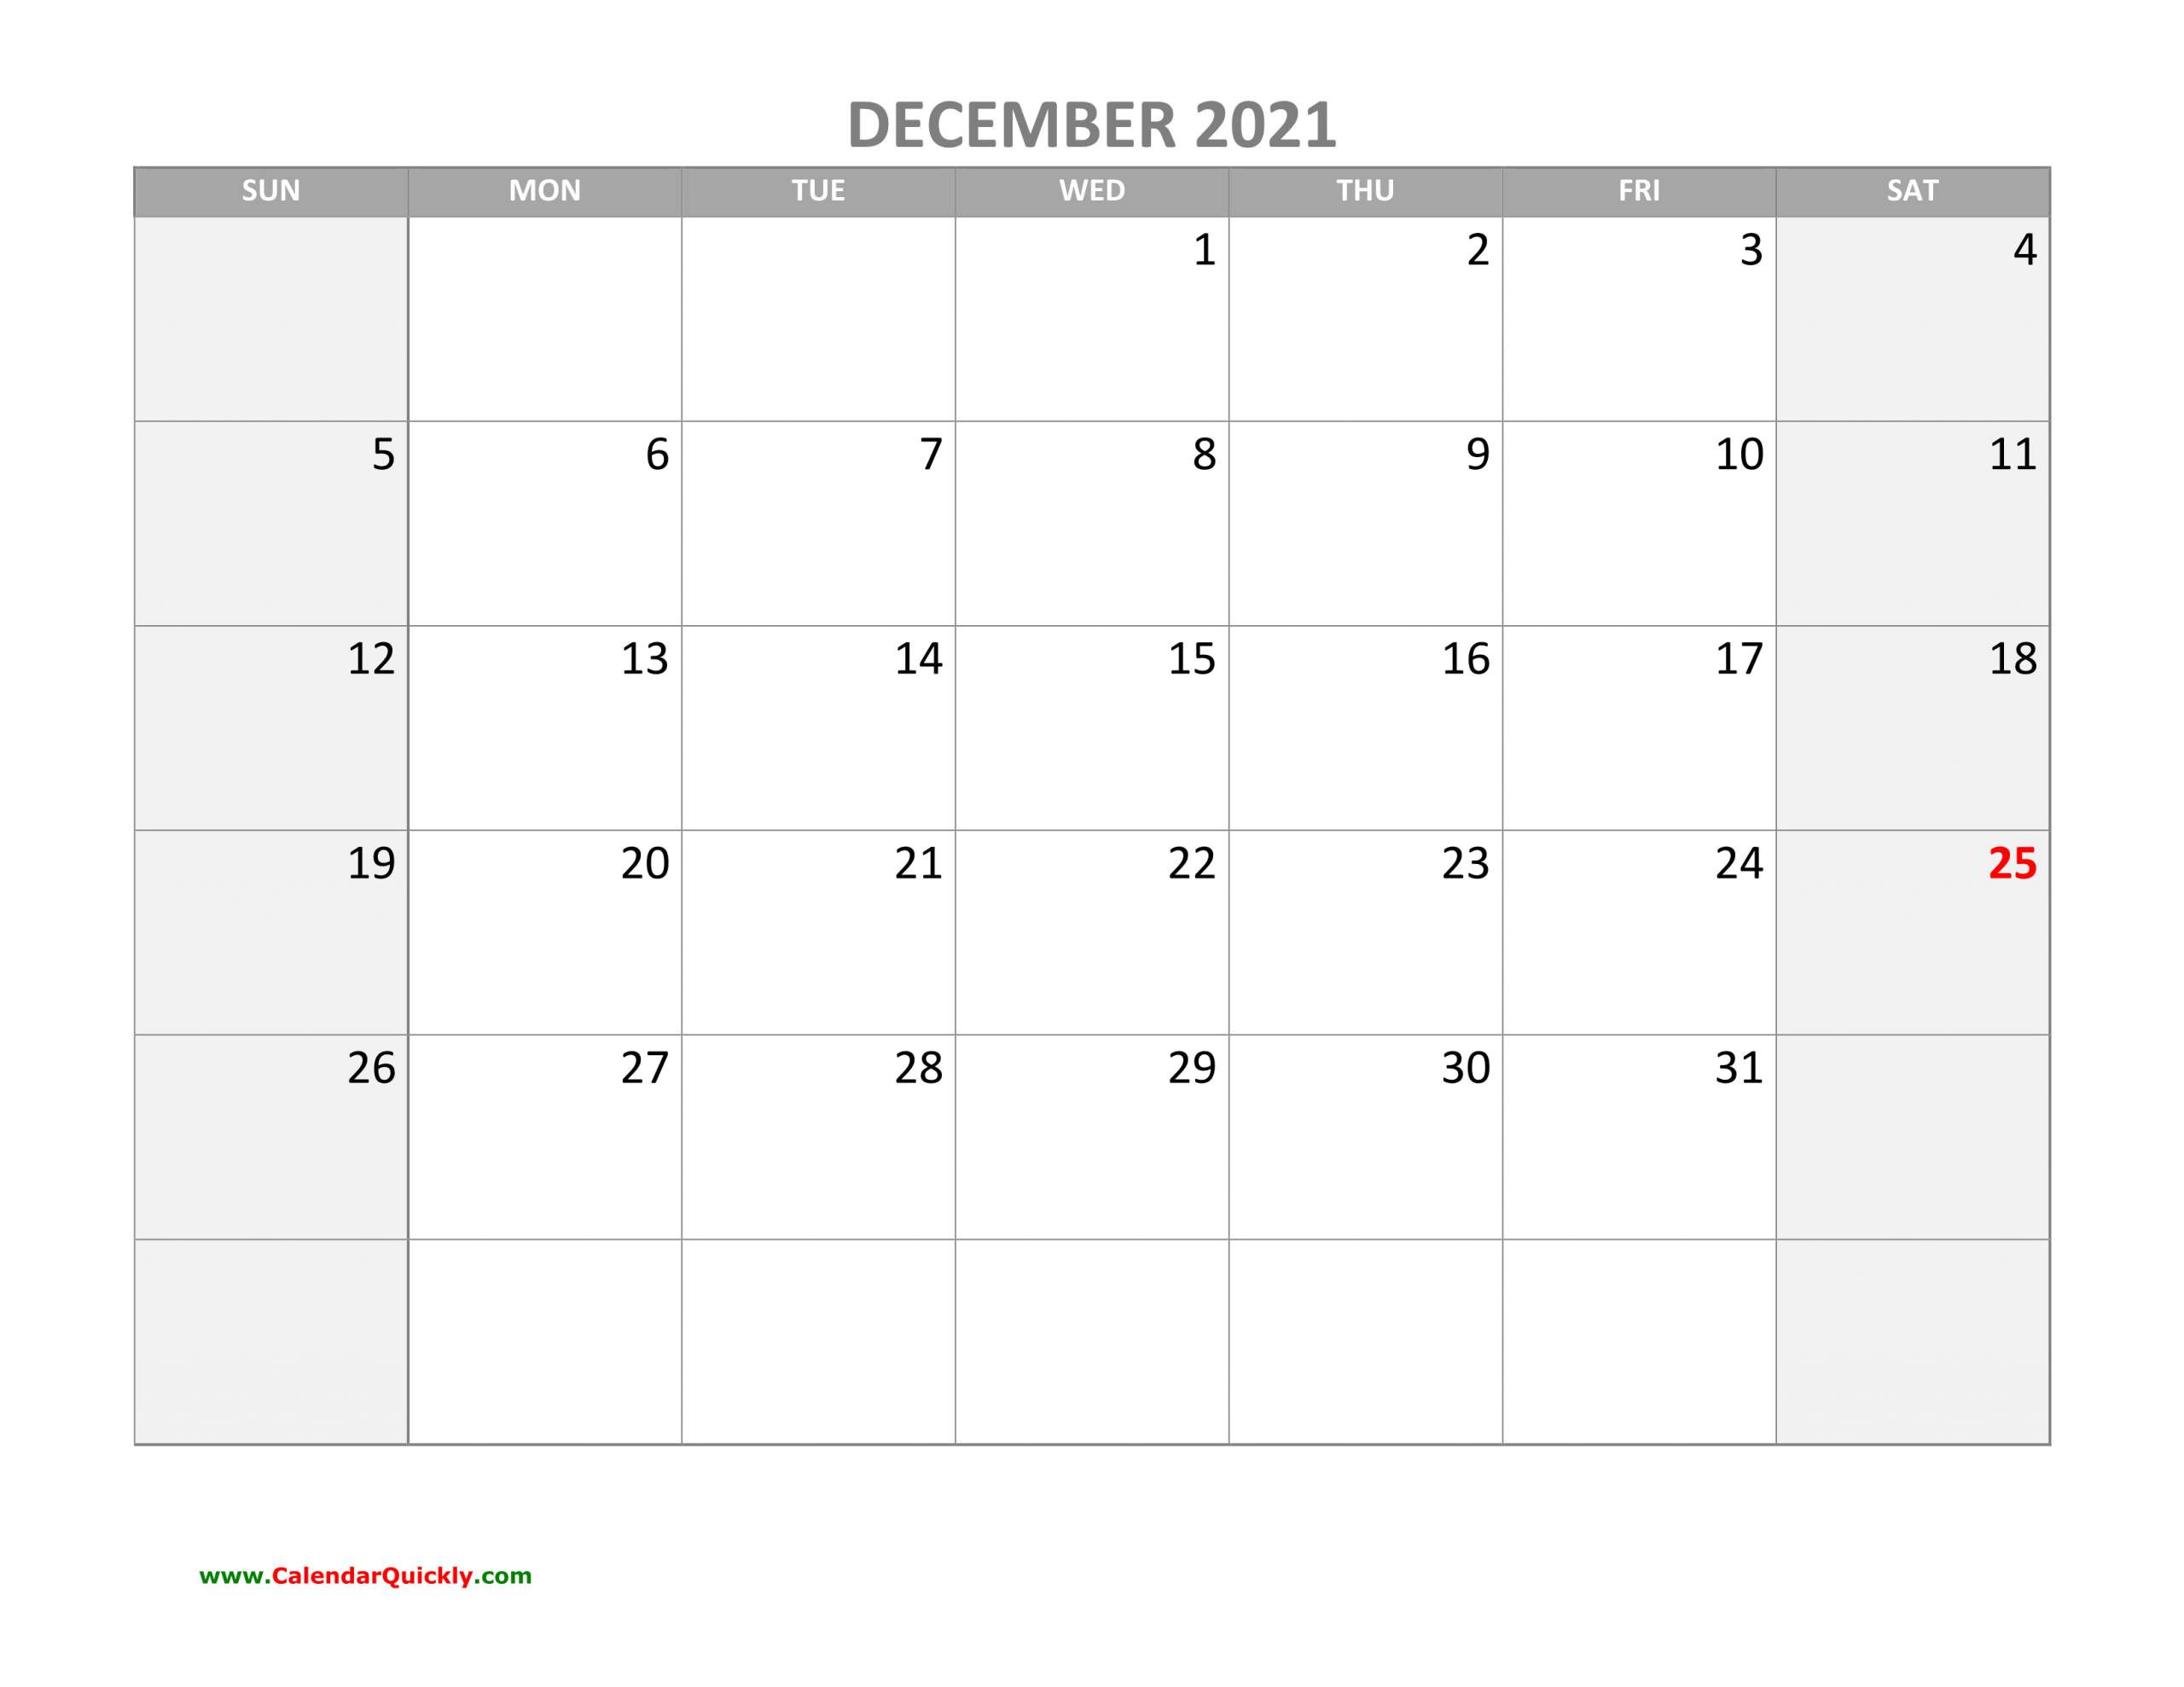 December Calendar 2021 With Holidays Calendar Quickly